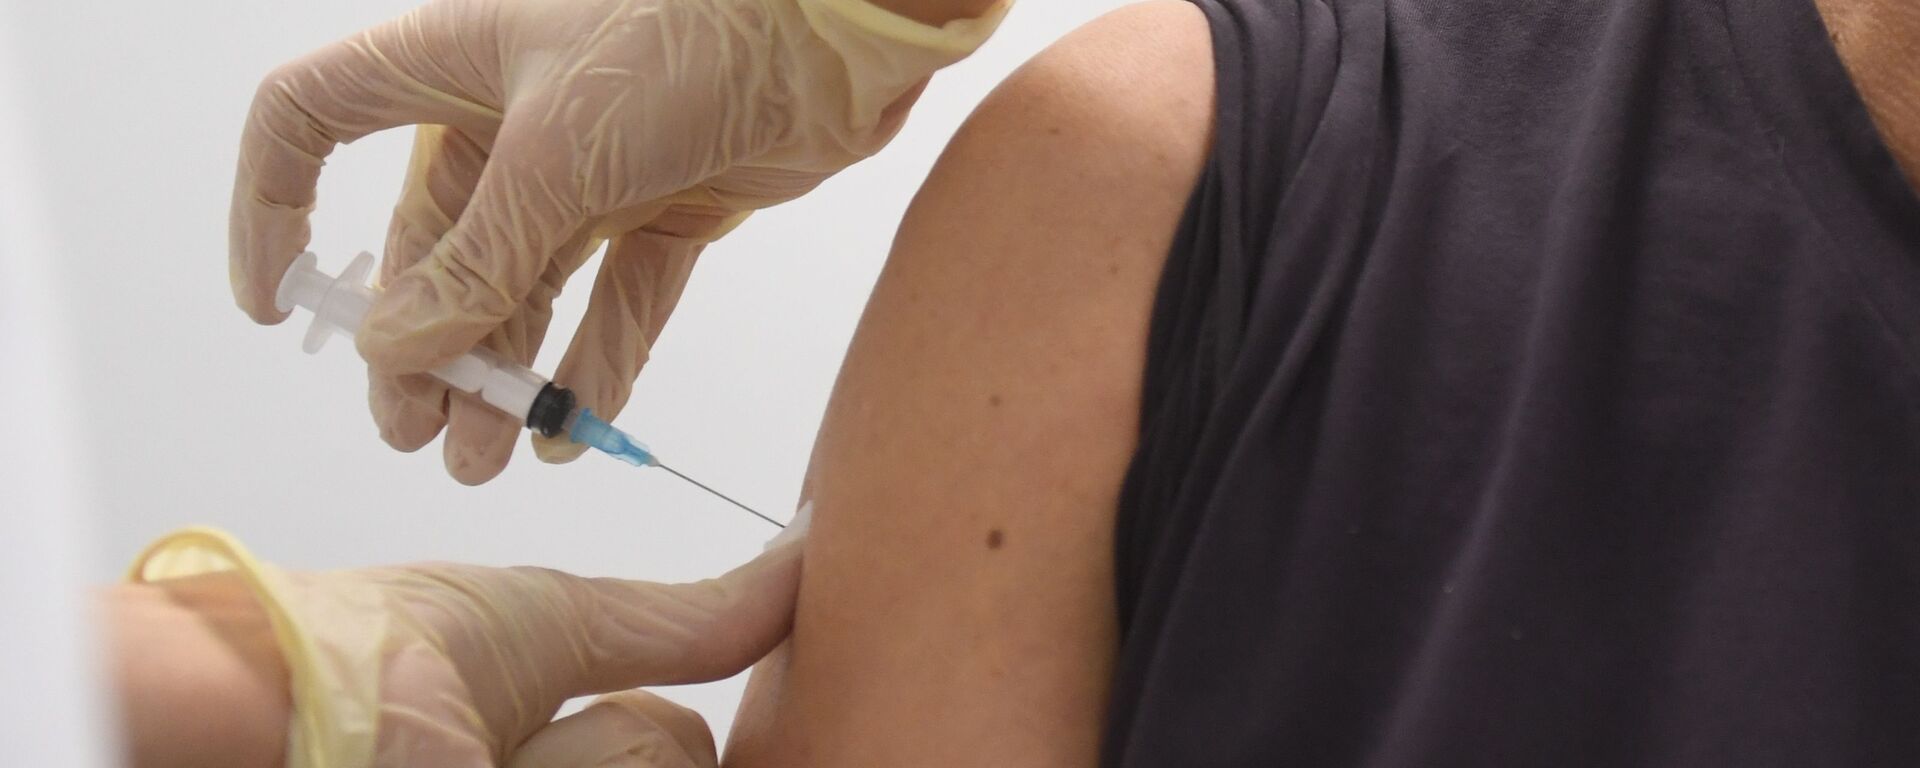 Мужчина вакцинируется против COVID-19 - Sputnik Узбекистан, 1920, 18.02.2021